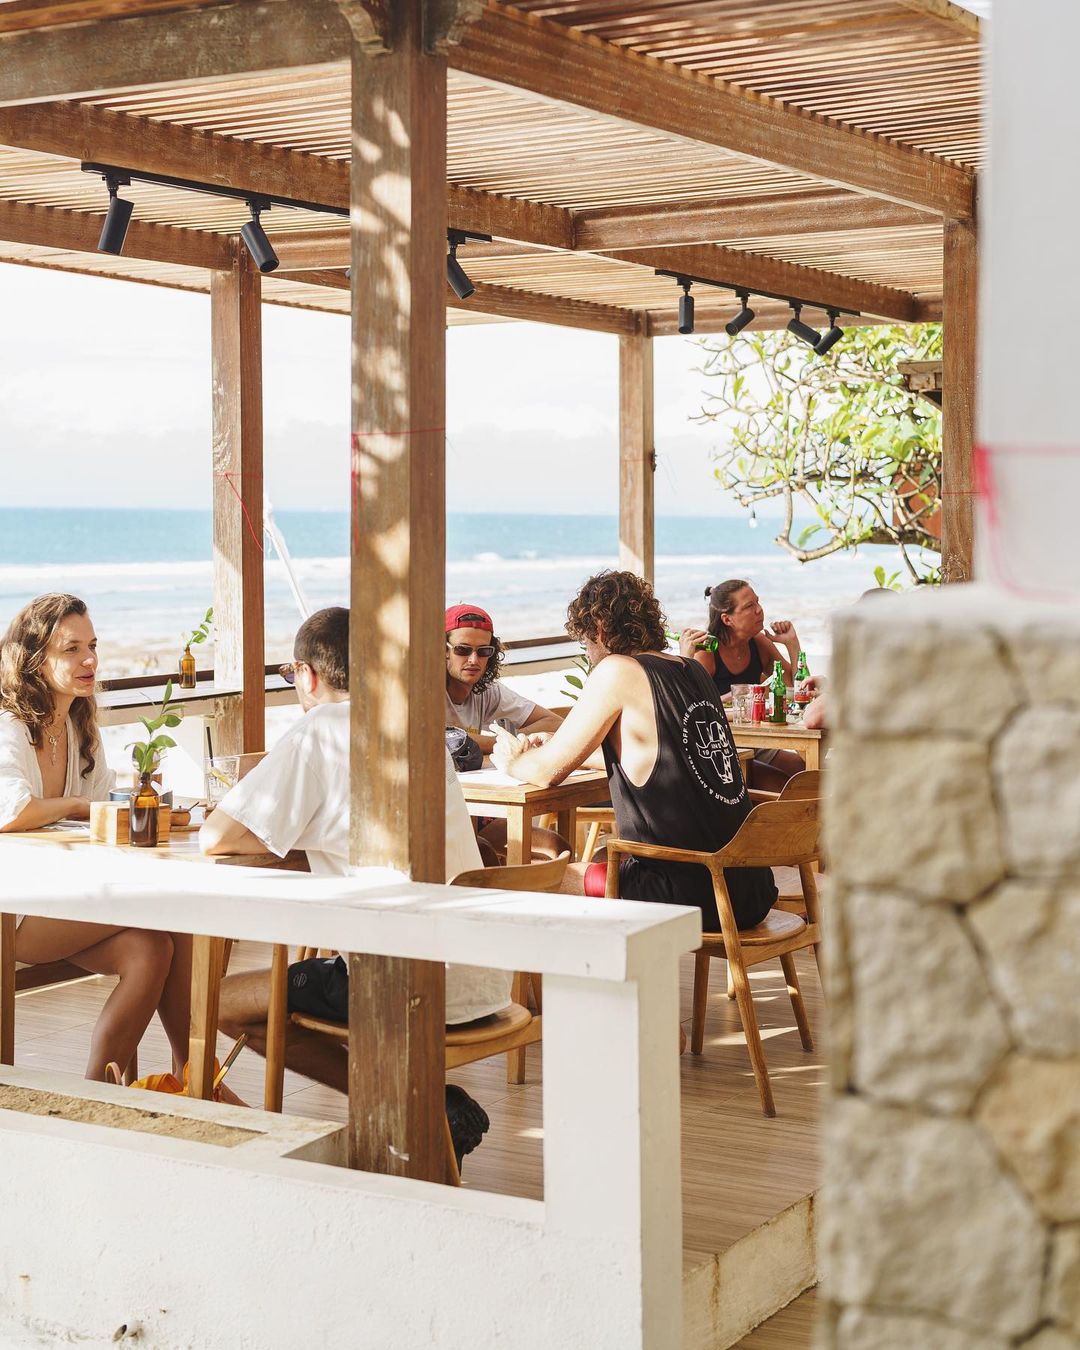 Harga Menu Jimmy Beach Cafe Bali Image From @jimmybeachcafe